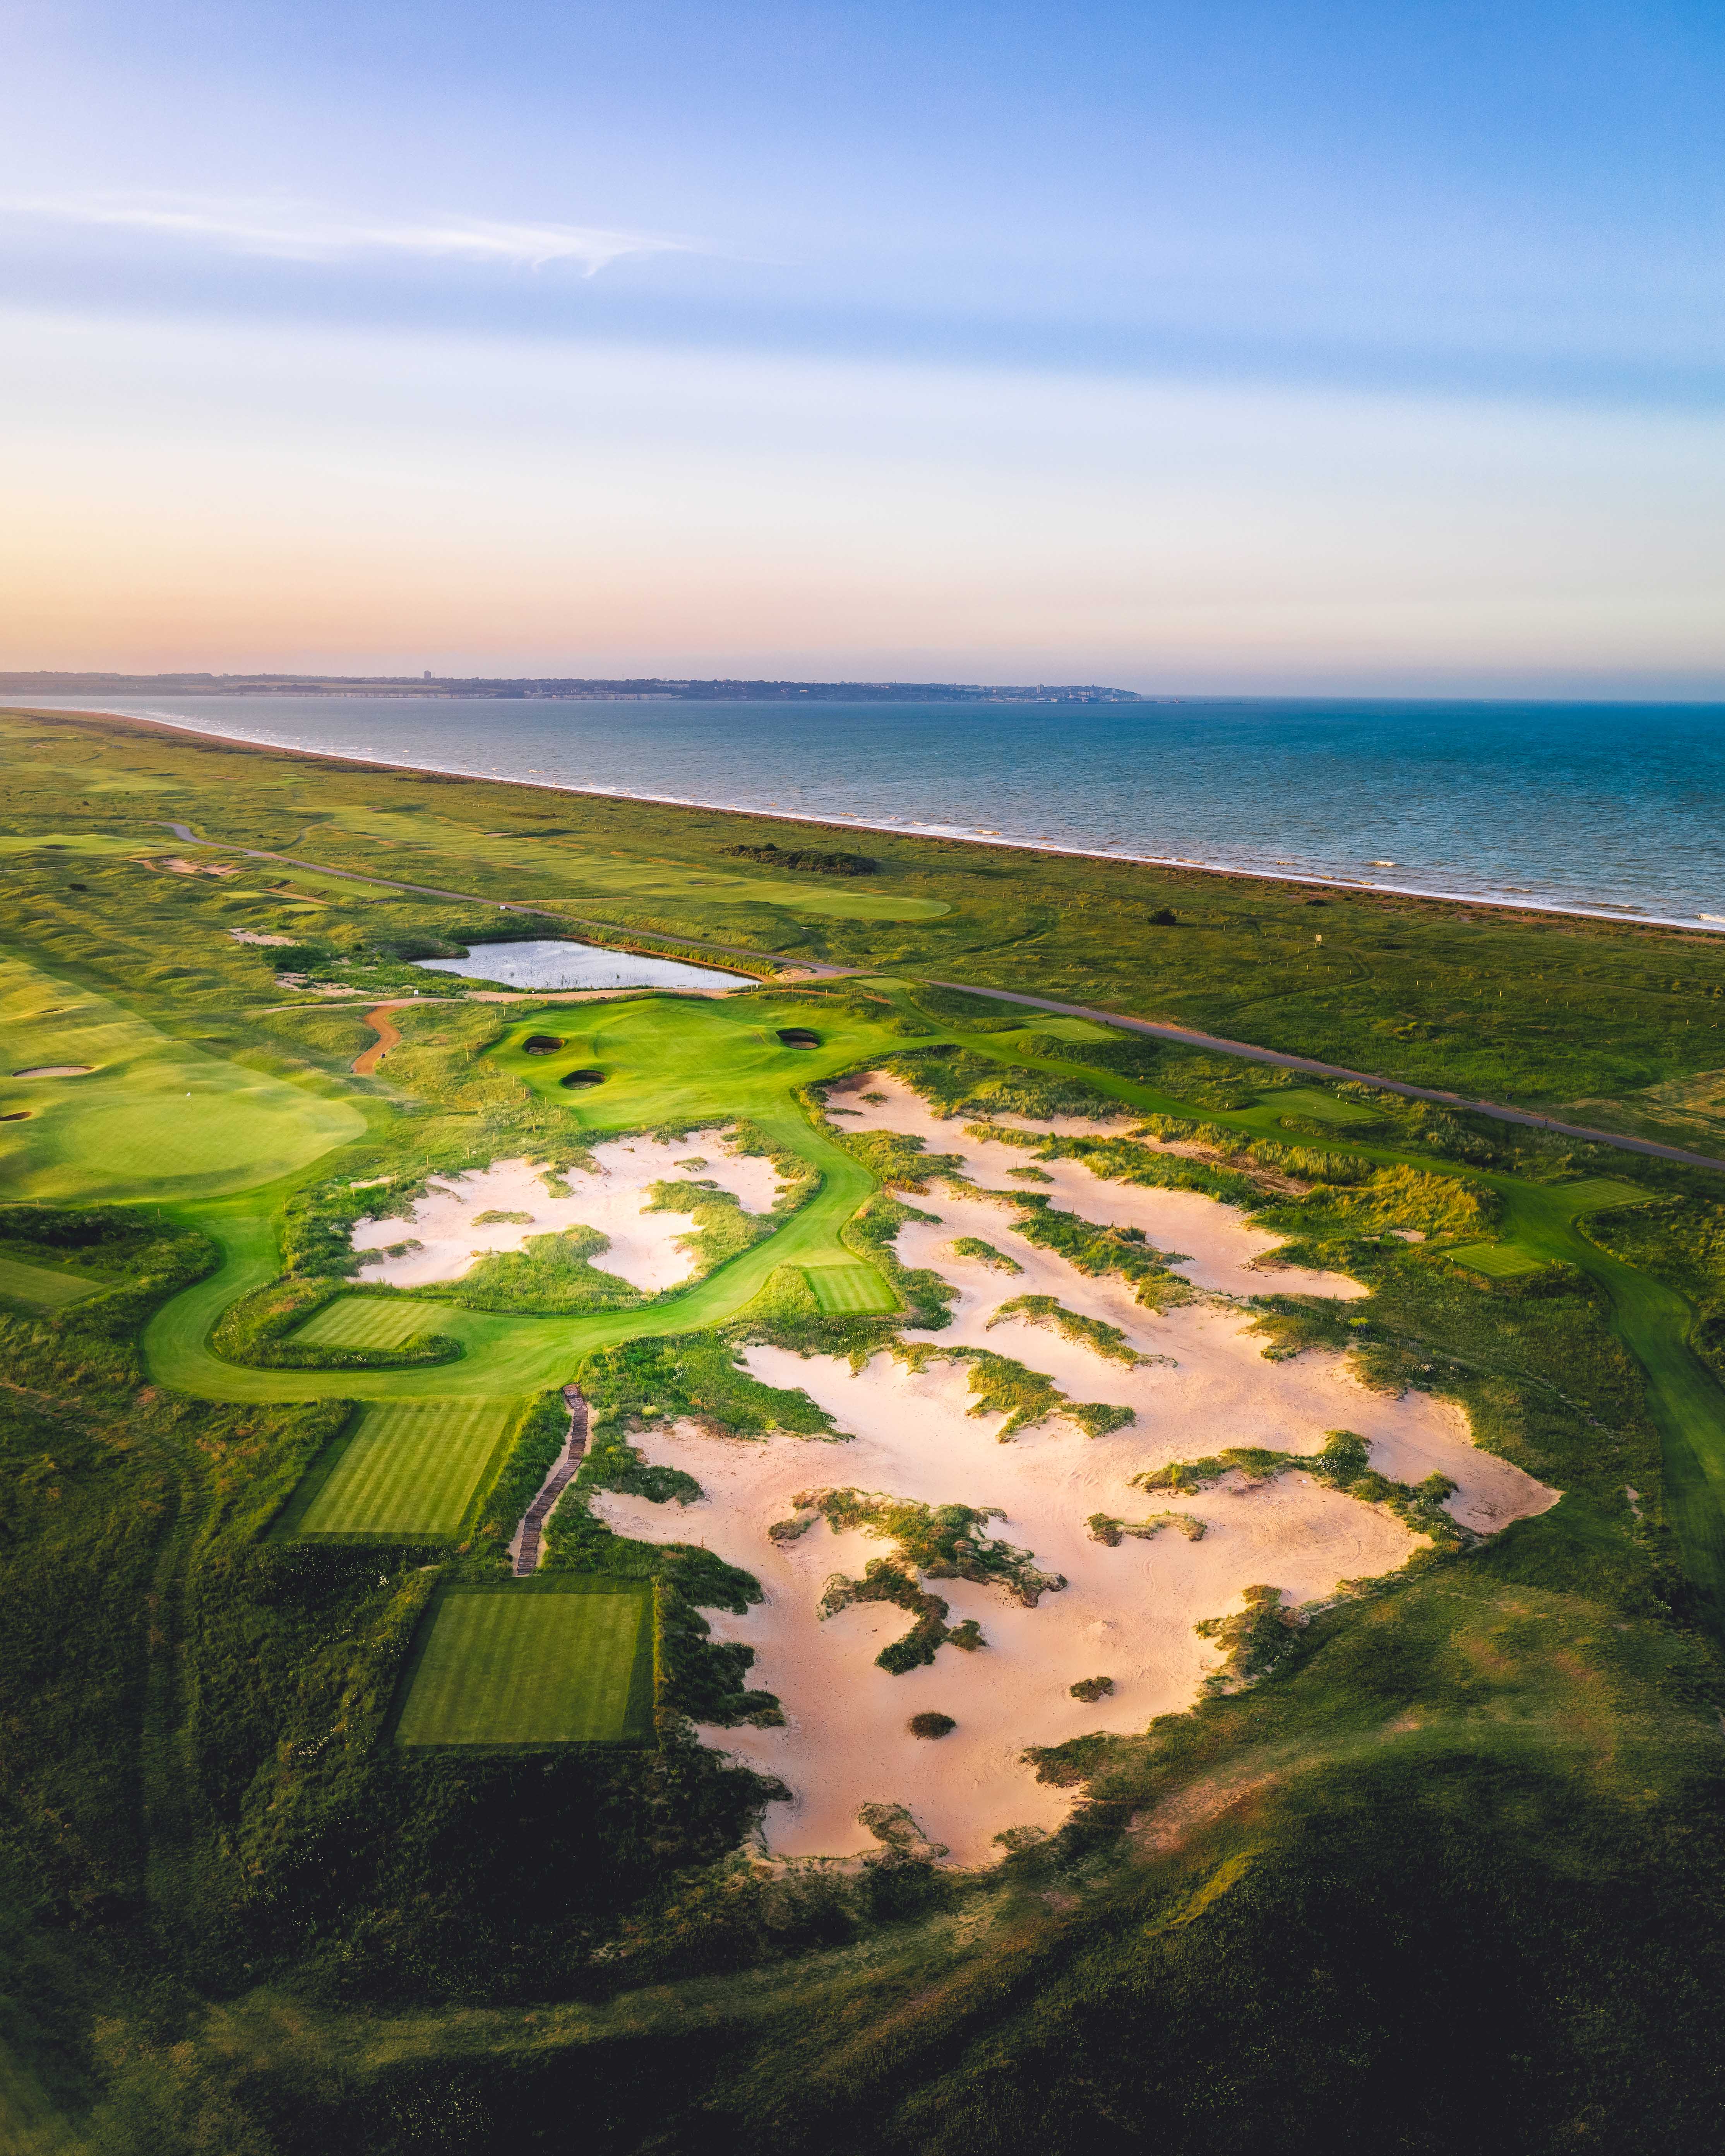 Prince's Golf Club opens new par-3 hole, Smugglers’ Landing